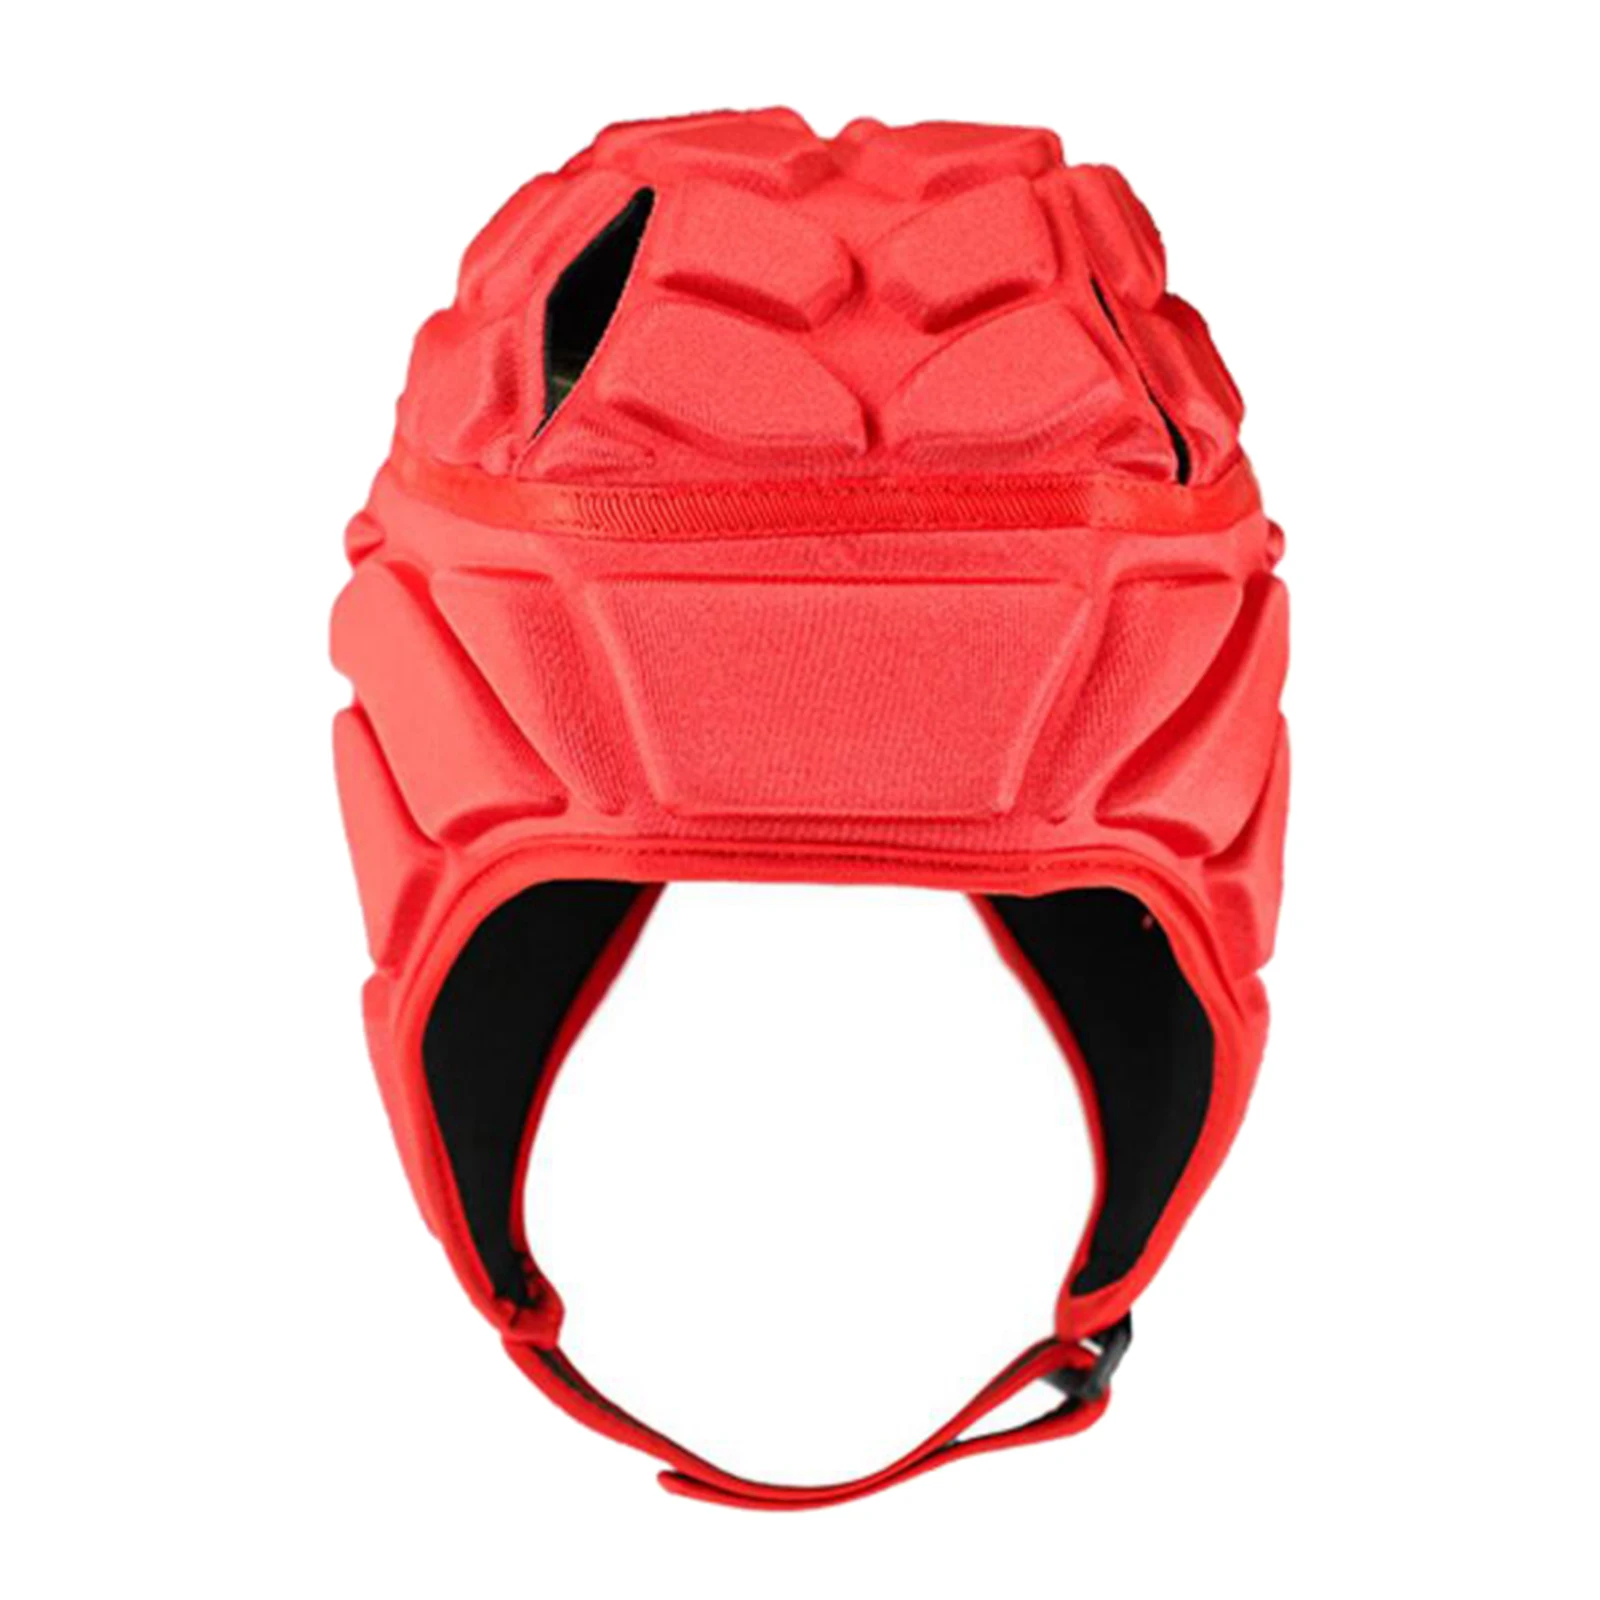 SM SunniMix Premium Rugby Helmet Sport Soft Shell Headguard Headgear Breathable Soccer Football Lacrosse Hockey for Adults 